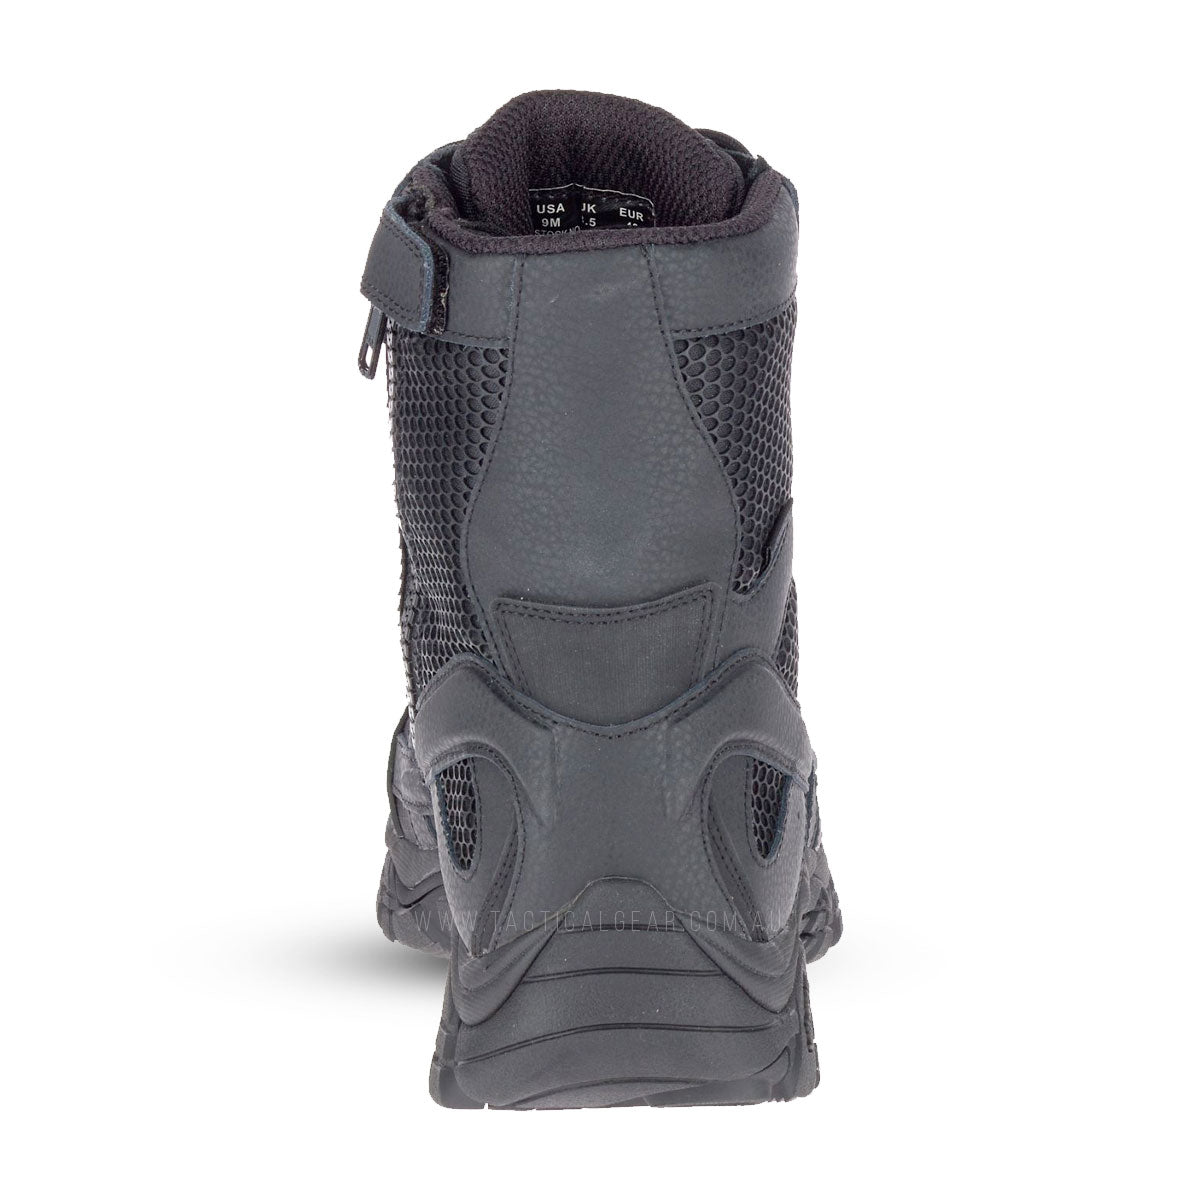 Merrell Tactical MOAB 2 Tactical Waterproof 8" Side-Zip Boot Black Tactical Gear Australia Supplier Distributor Dealer